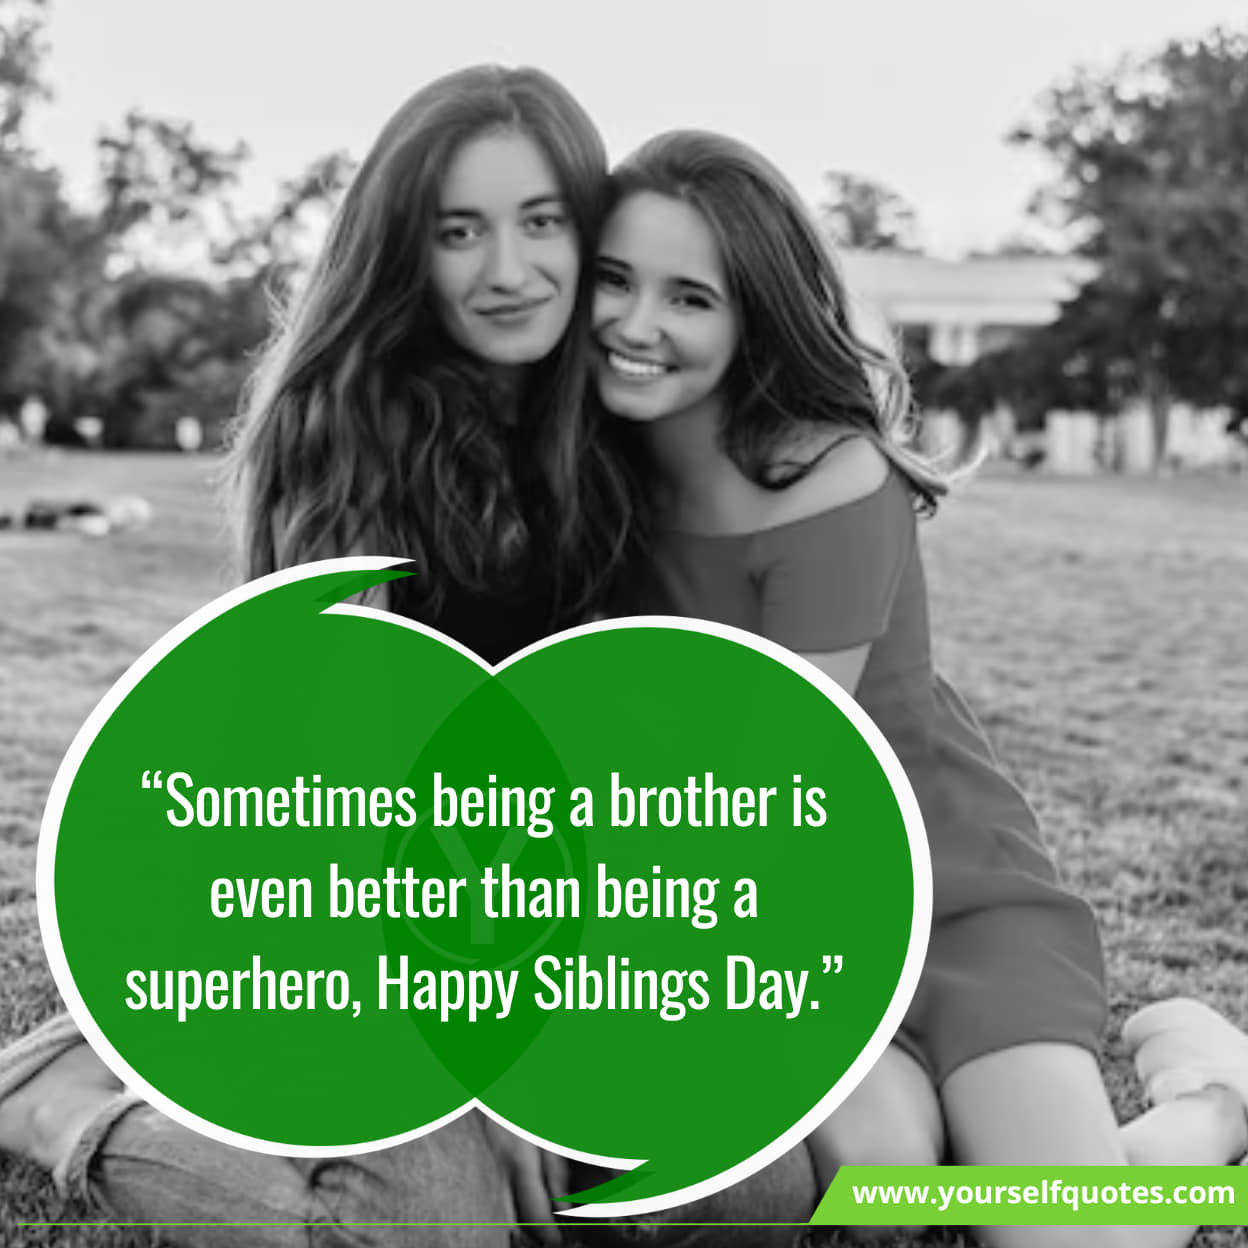 Appreciating Sibling Relationships on National Siblings Day